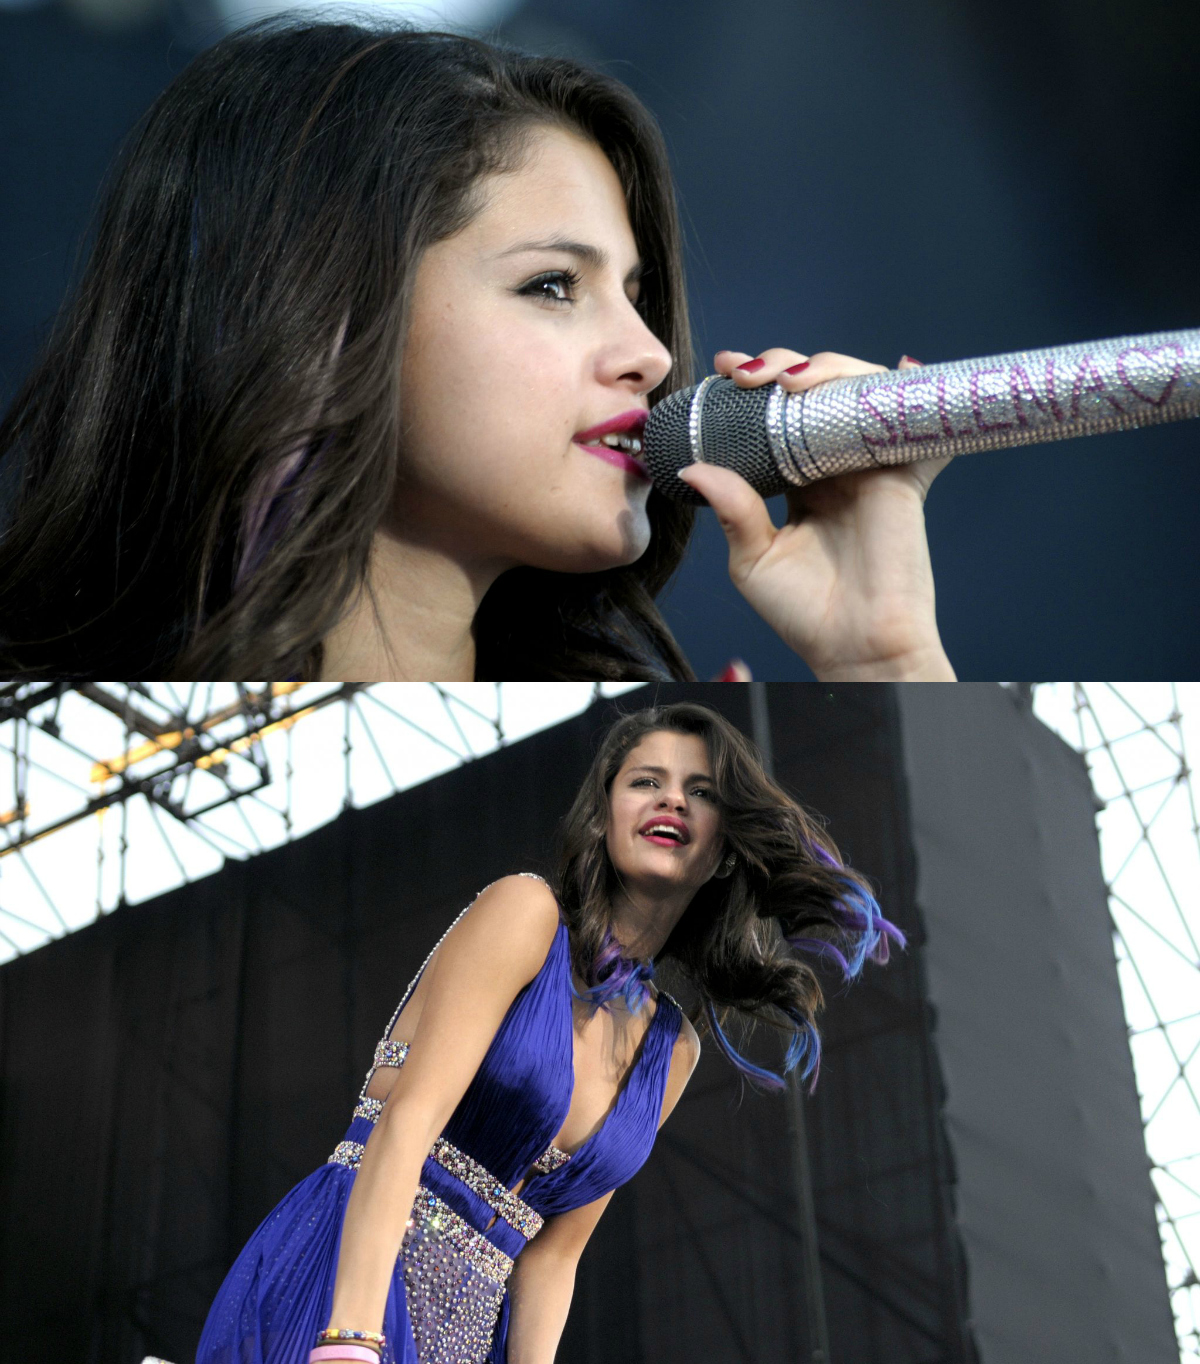 Selena Gomez in We Own The Night Tour 